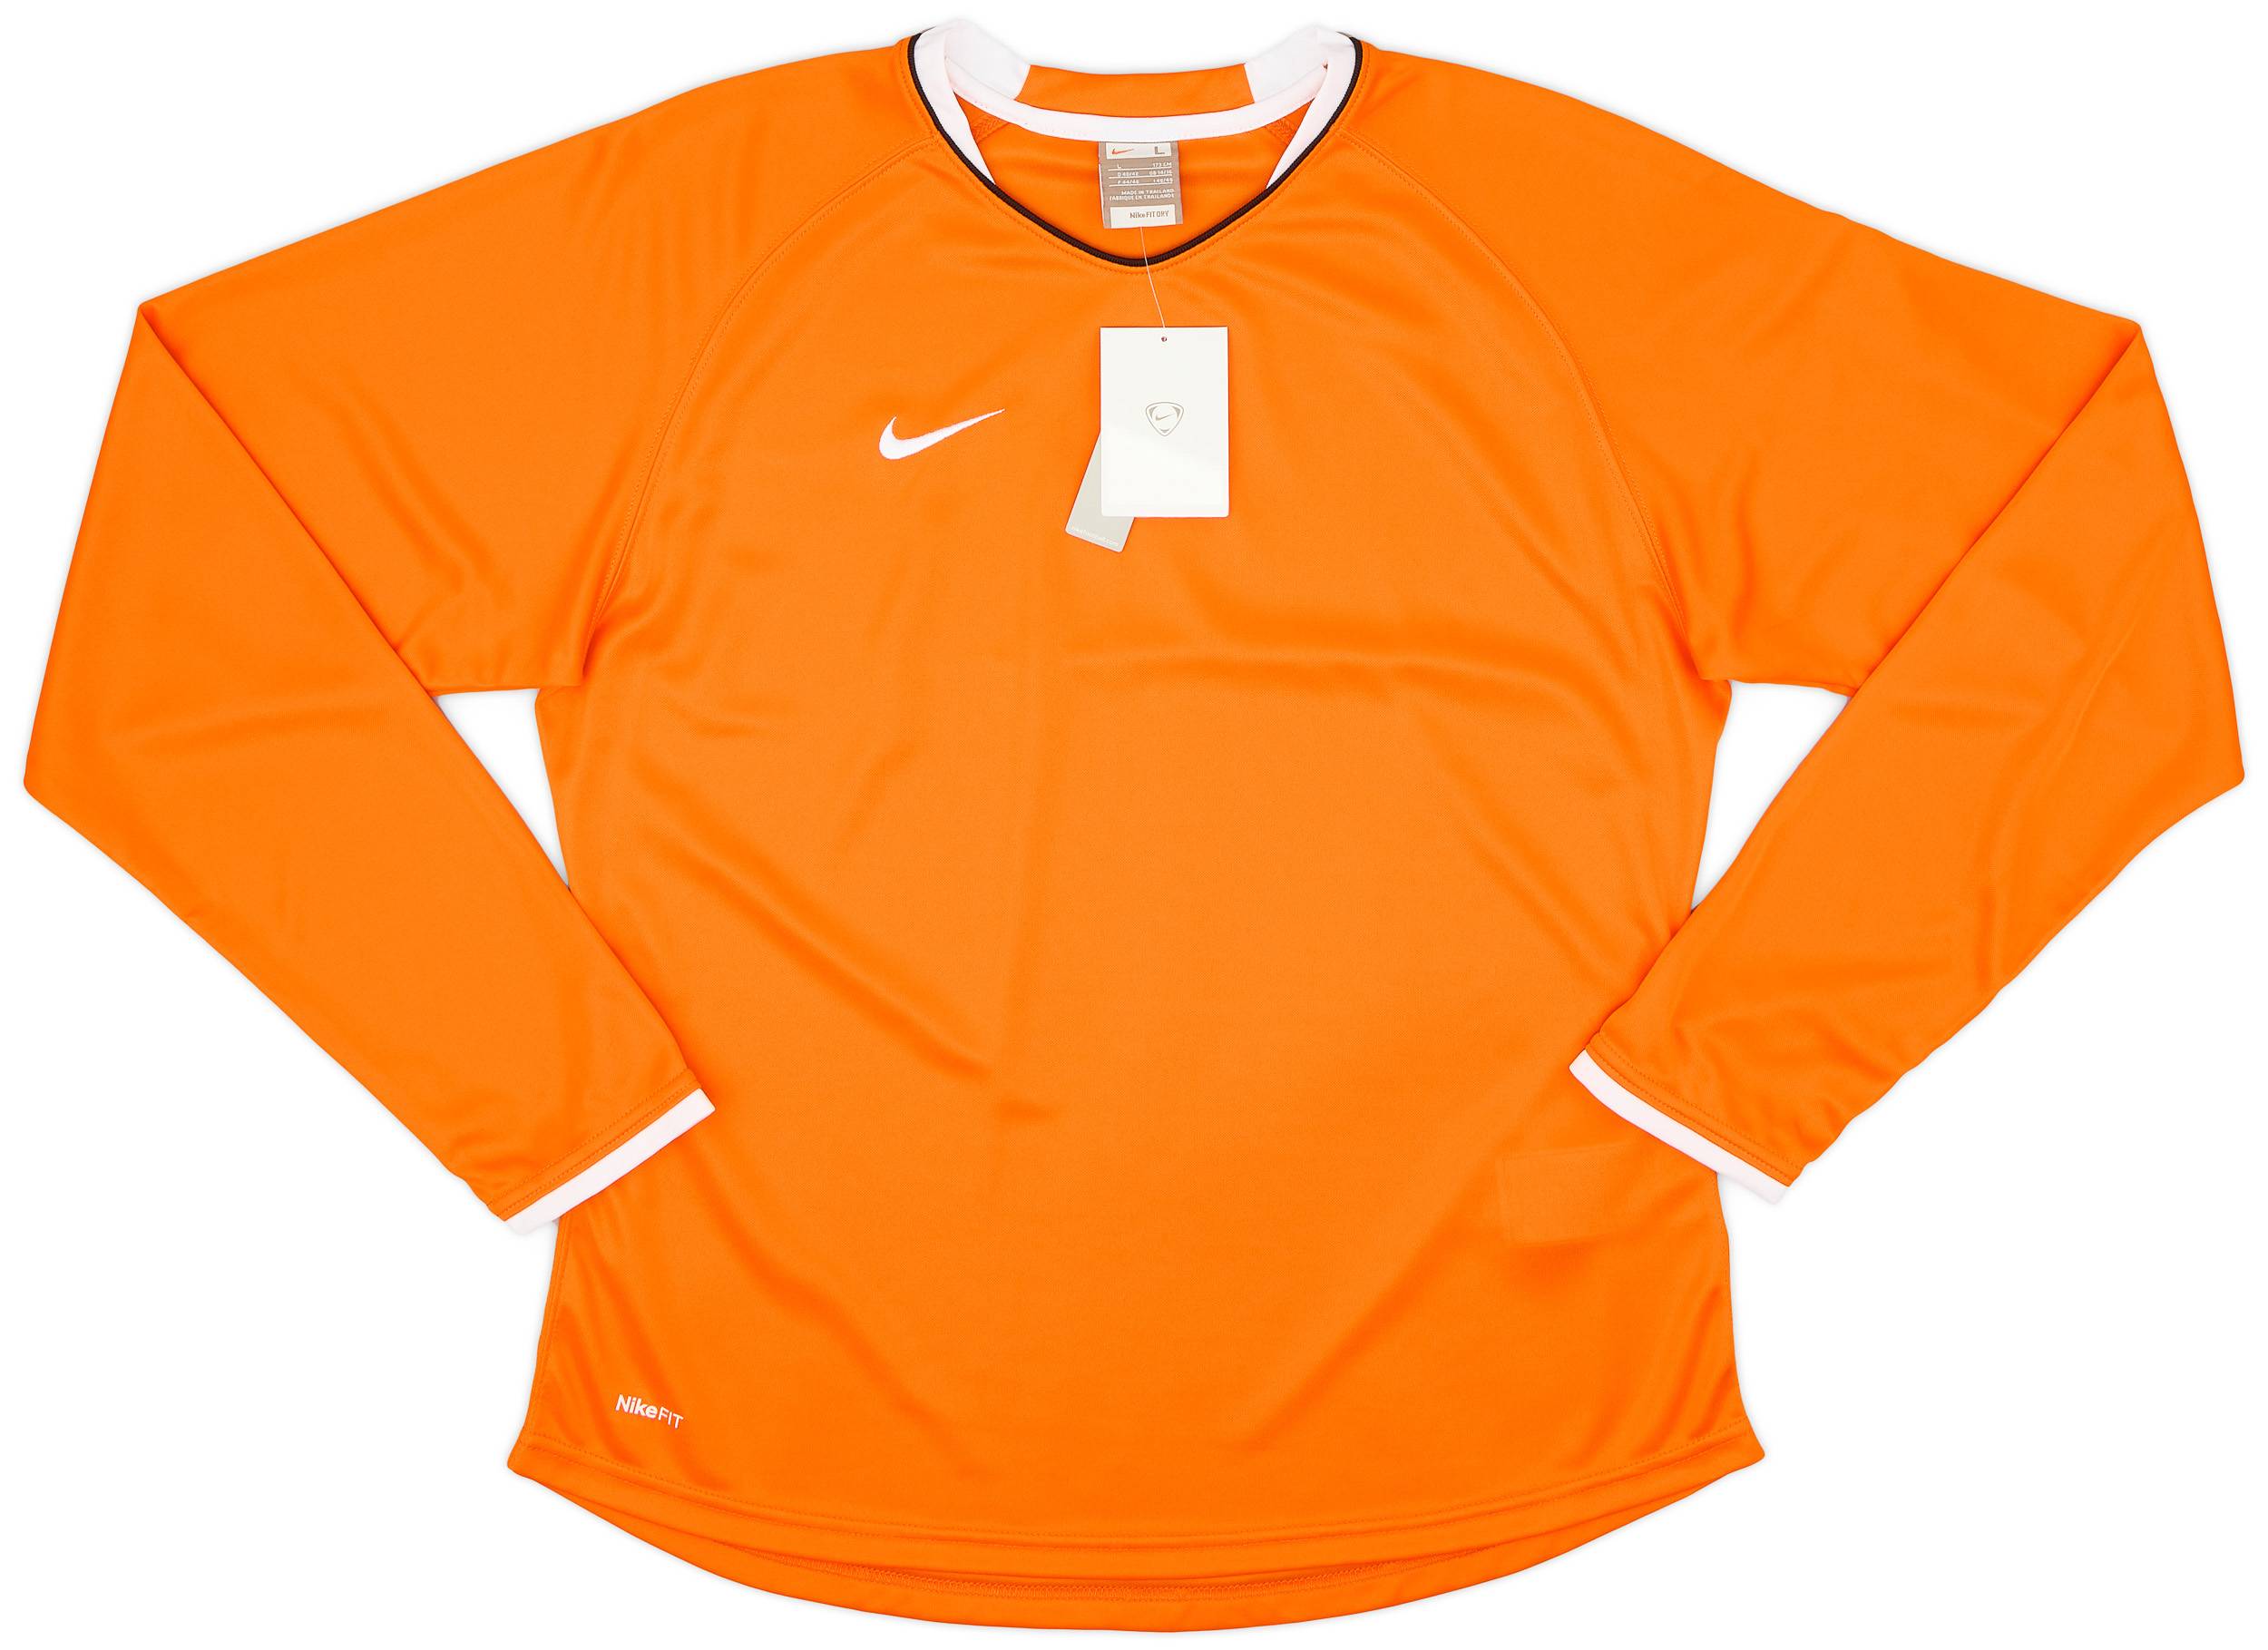 2007-08 Nike Template L/S Shirt - 9/10 - (Women's L)